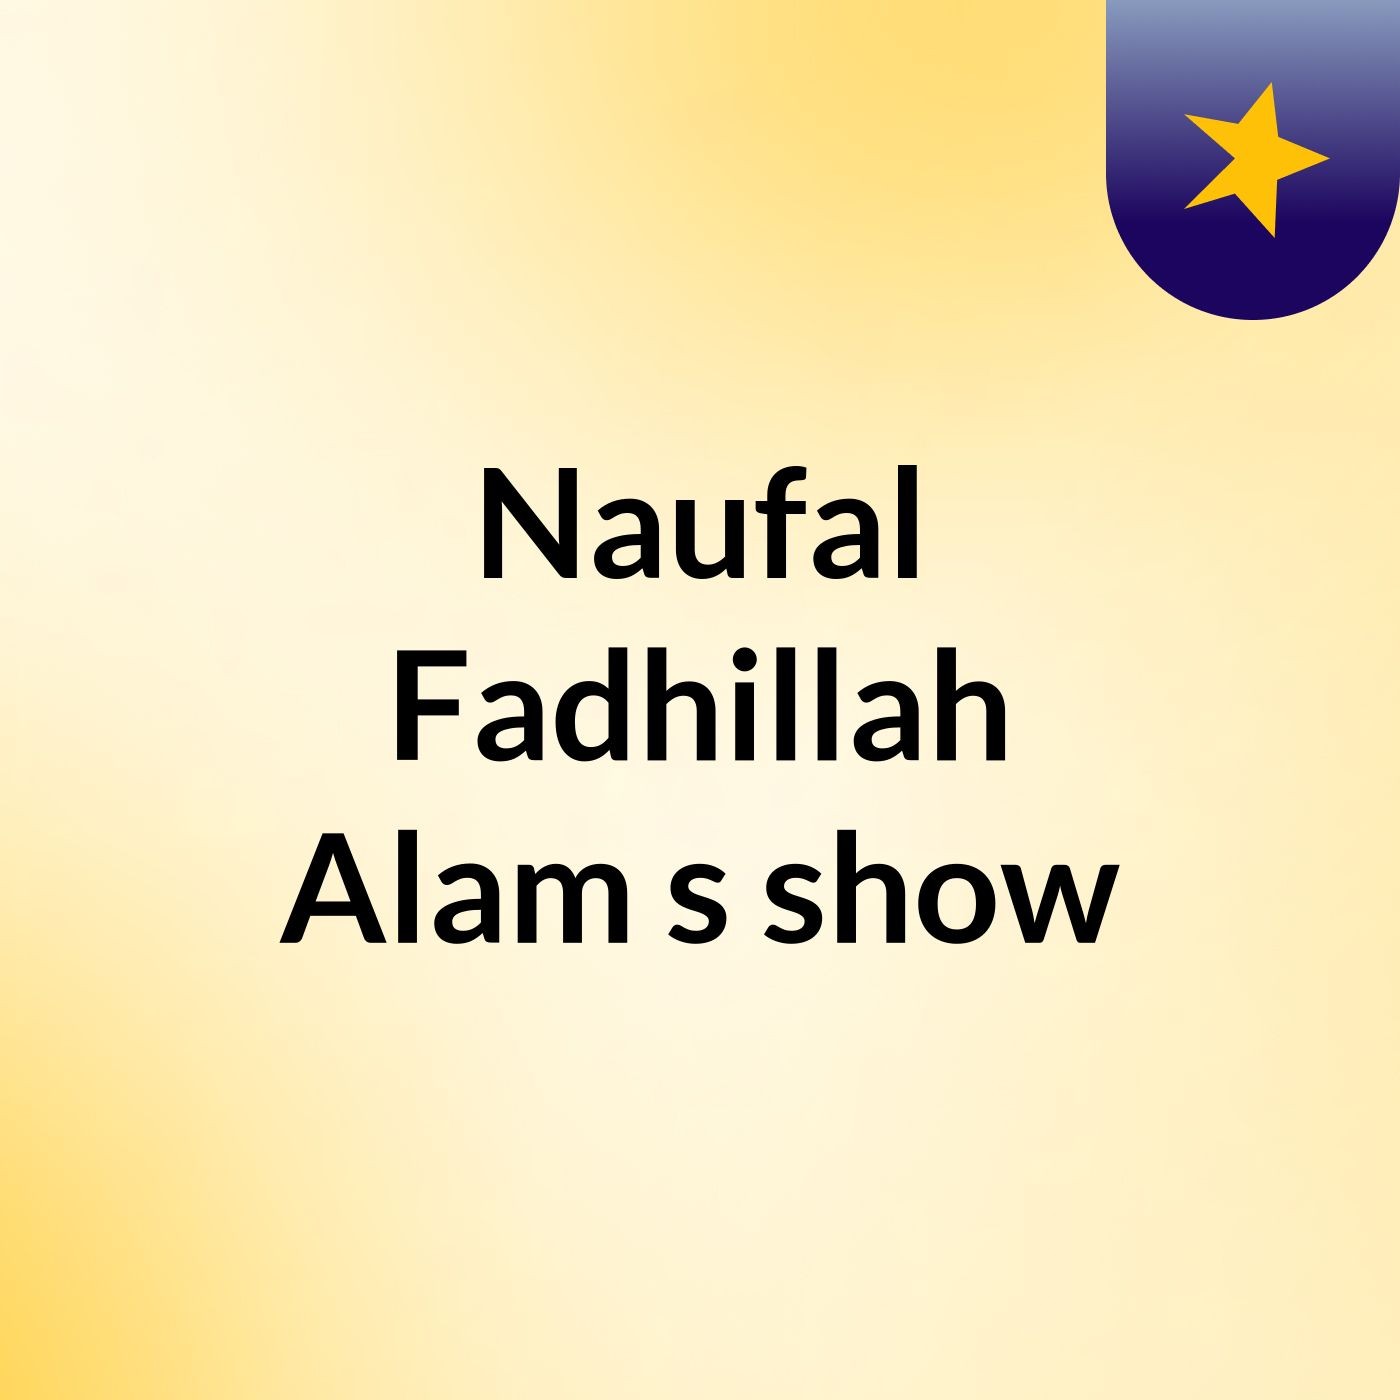 Naufal Fadhillah Alam's show